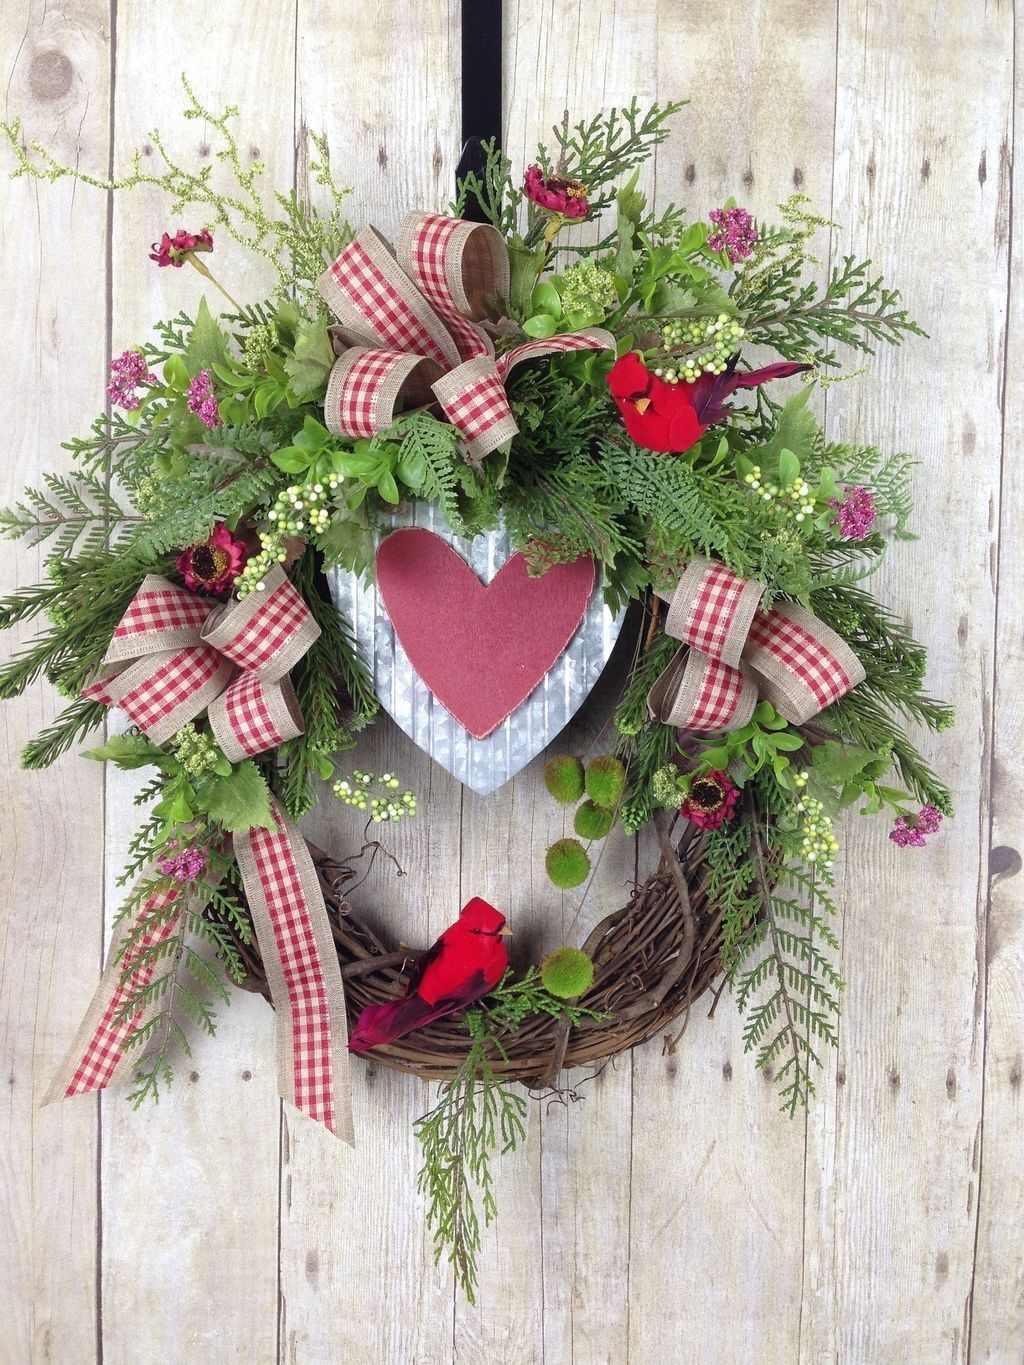 Cute Valentine Door Decorations Ideas To Spread The Seasons Greetings 21